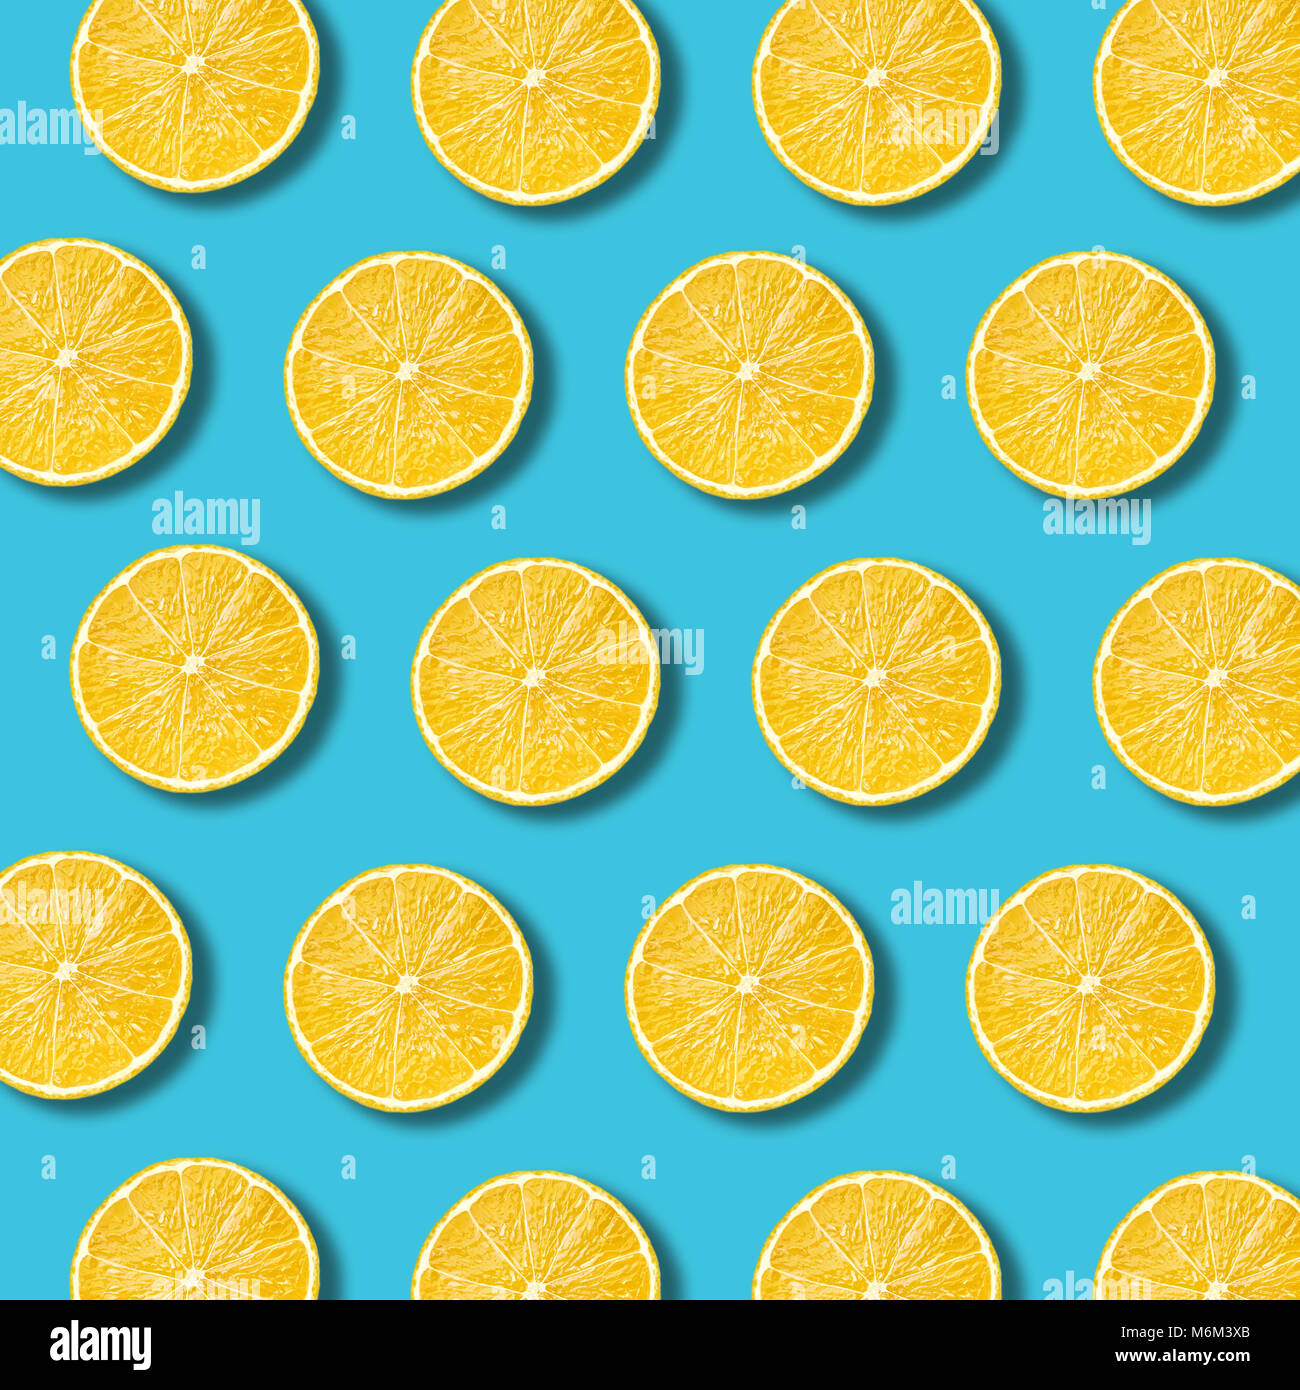 Lemon slices pattern on vibrant turquoise color background. Minimal flat lay food texture Stock Photo